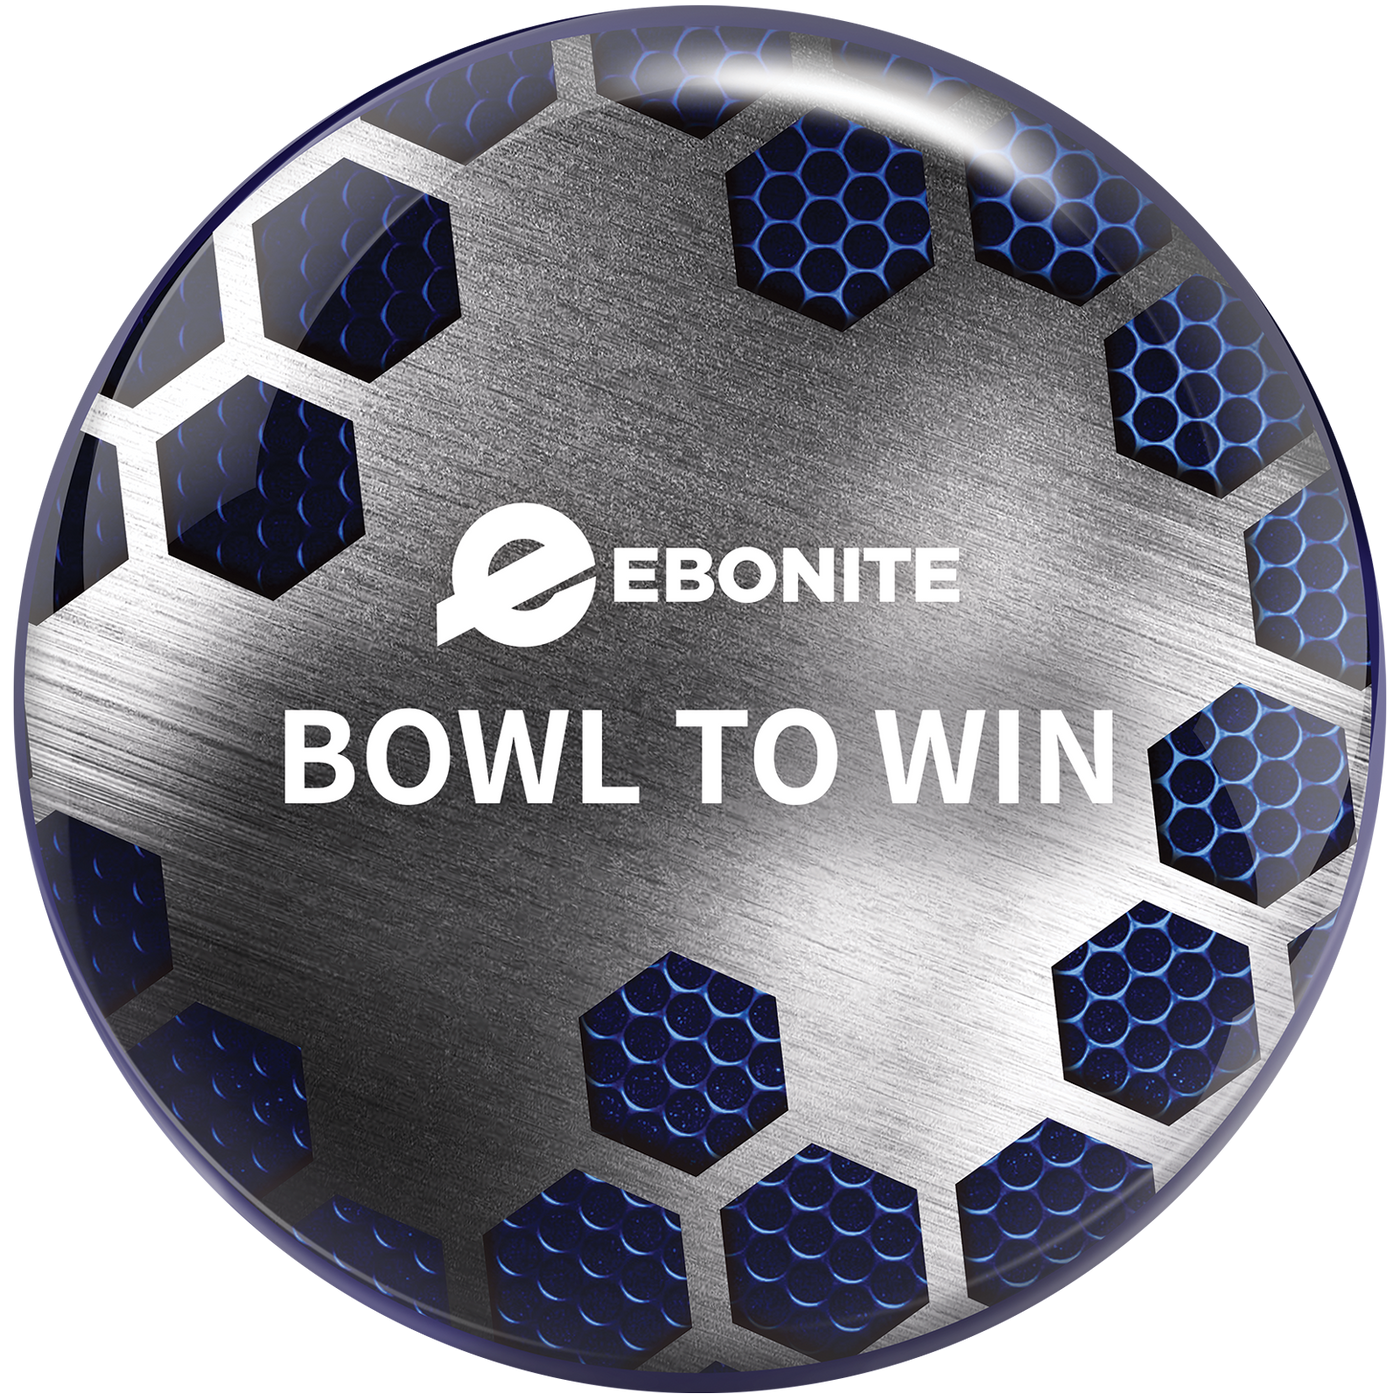 Back of the Ebonite Viz-A-Ball bowling ball